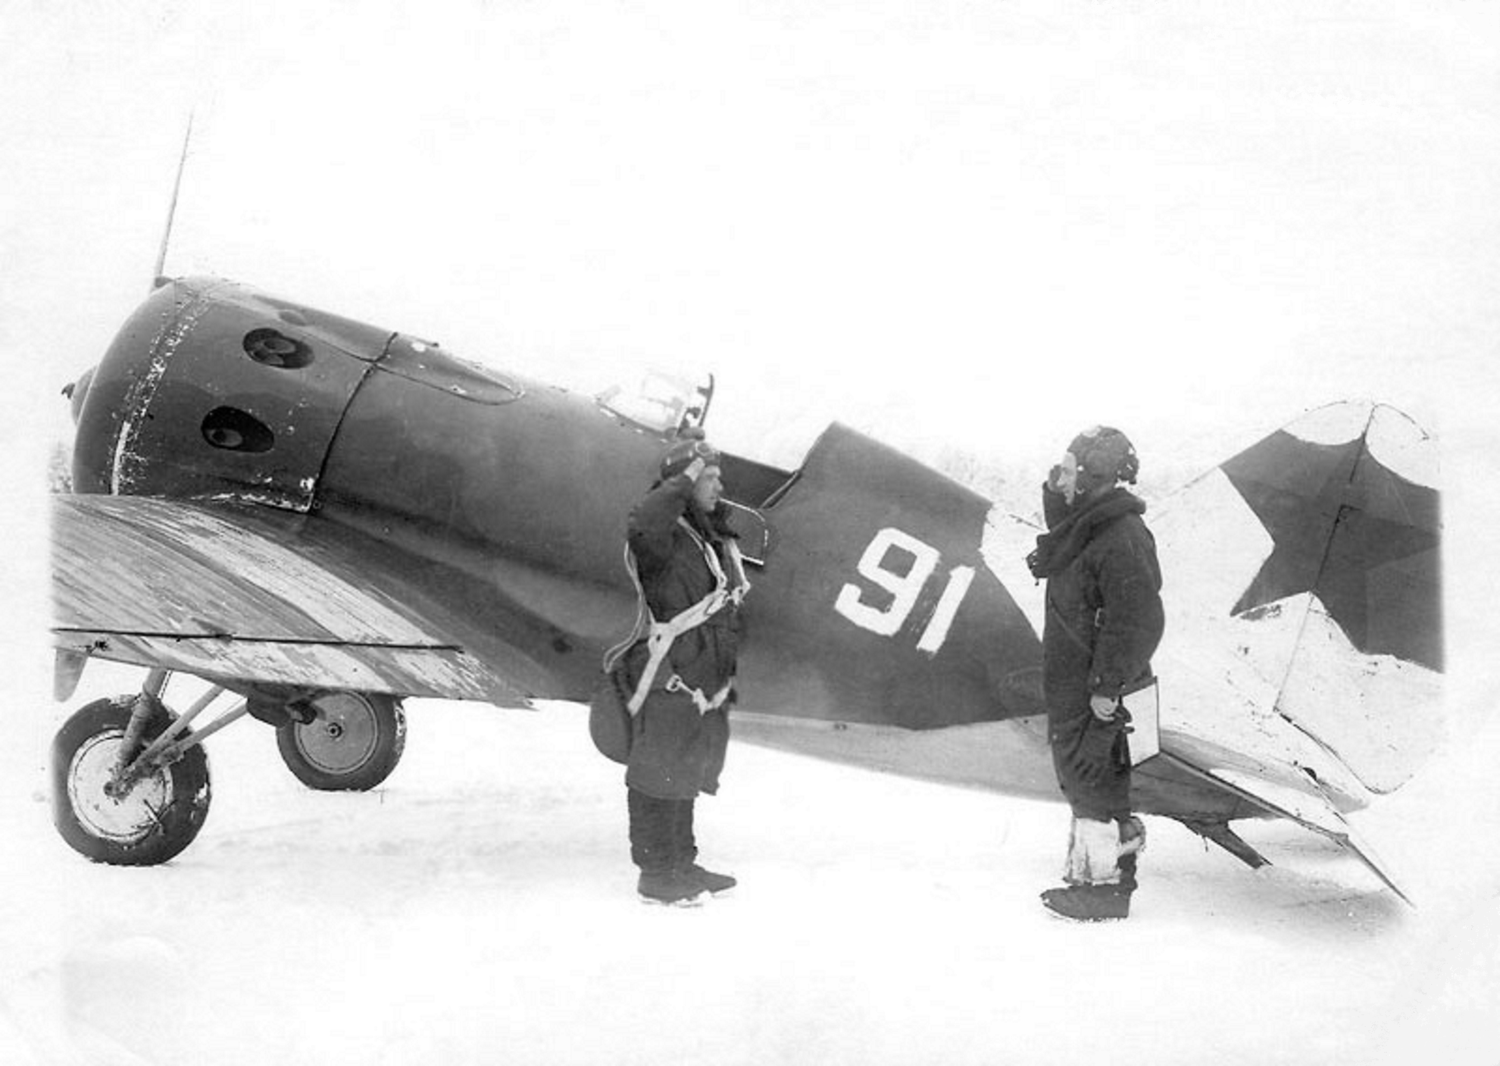 Советские истребители 1945